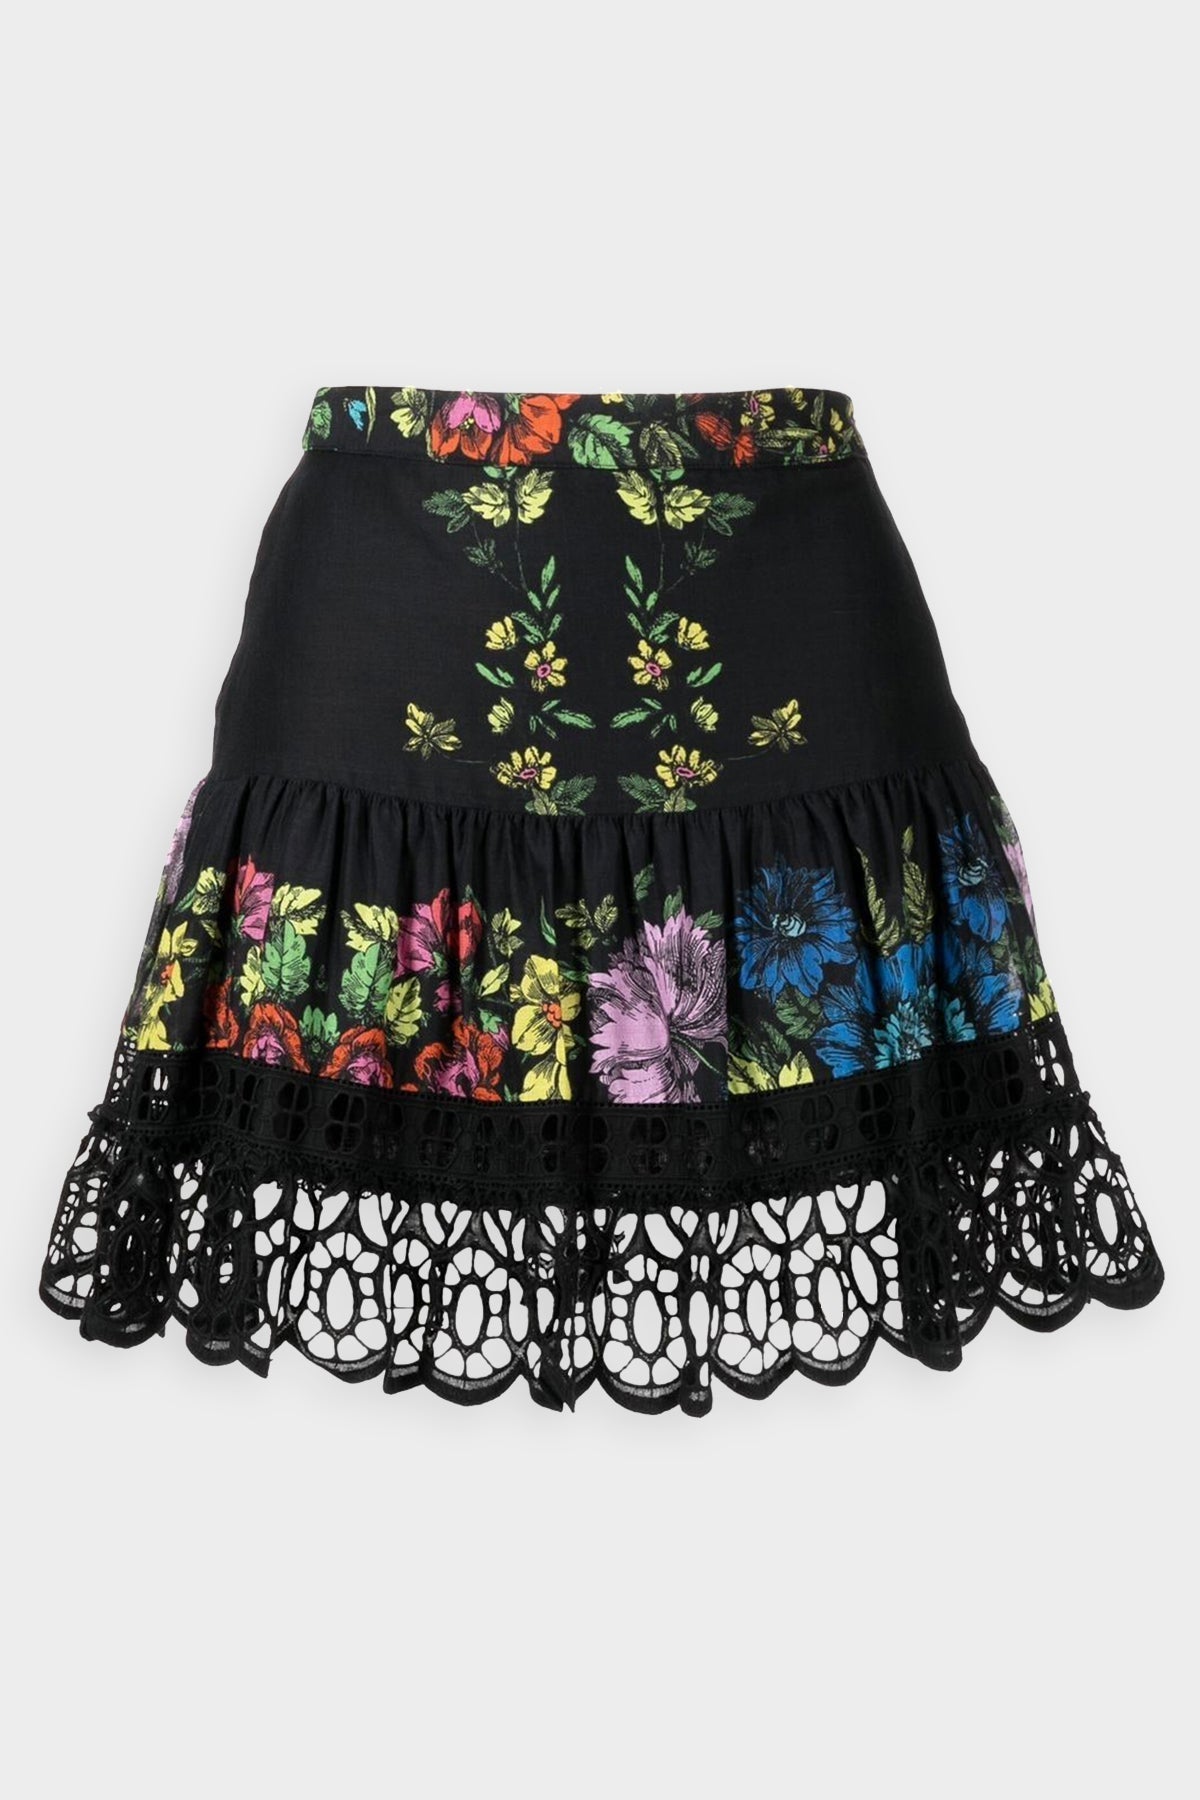 Eibis Short Skirt in Garden Black Print - shop-olivia.com